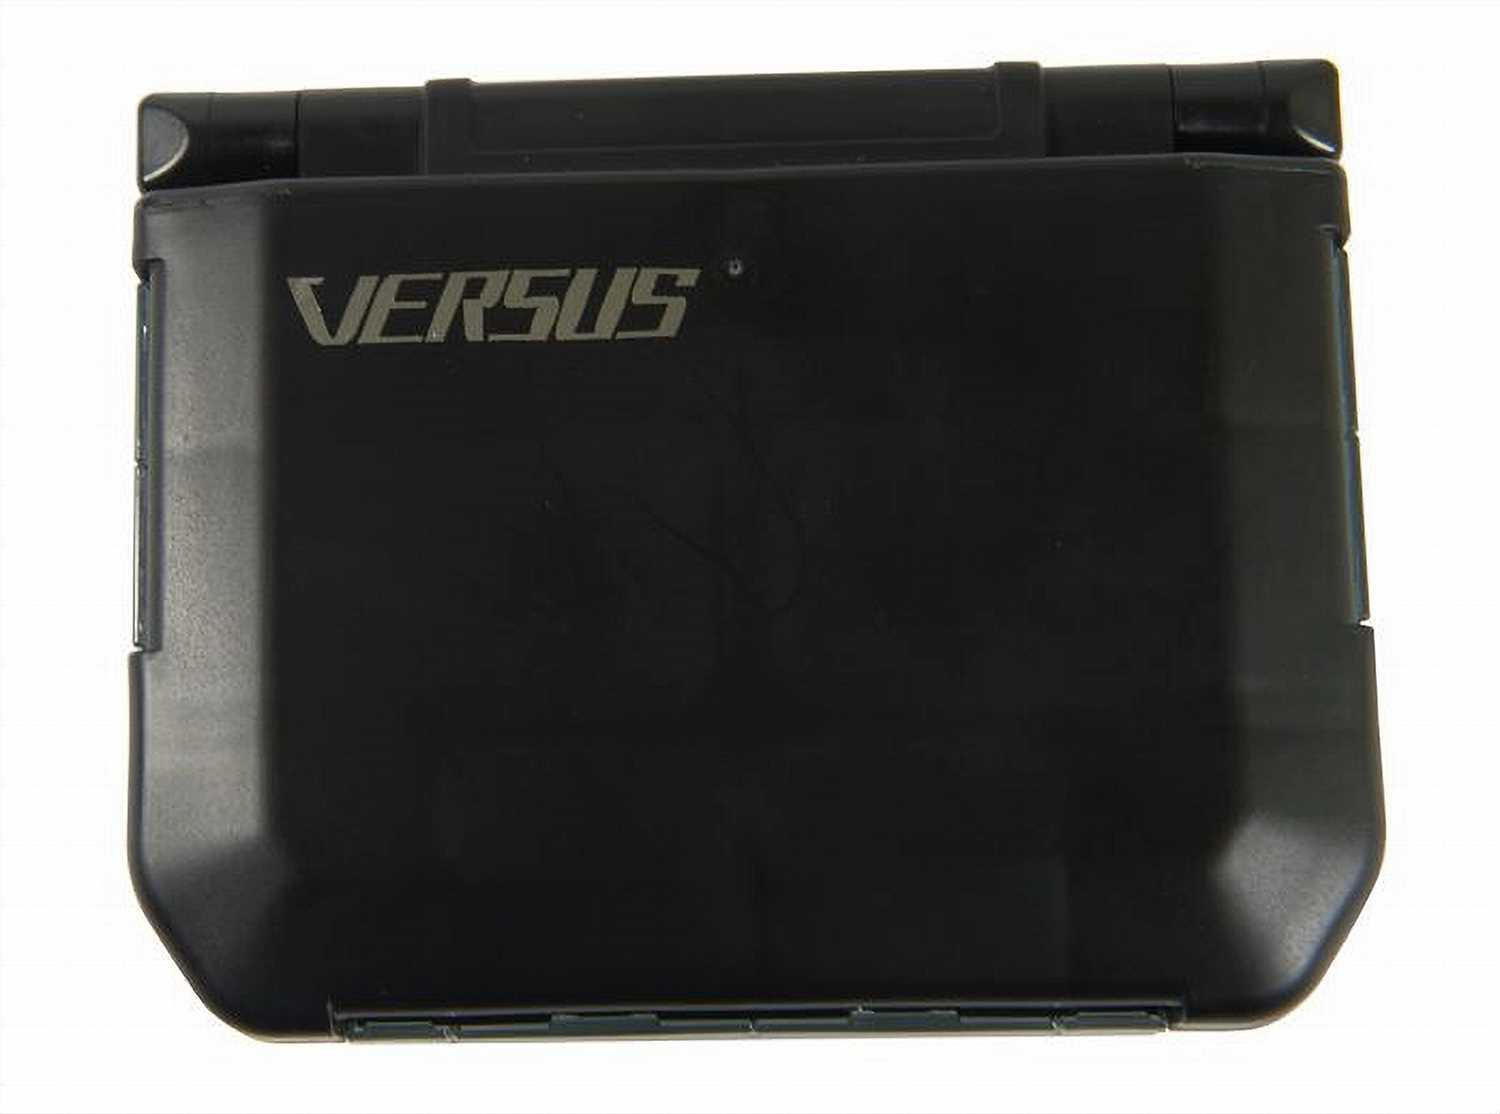 Meiho Versus 388DD Folding Compartment Case - Black